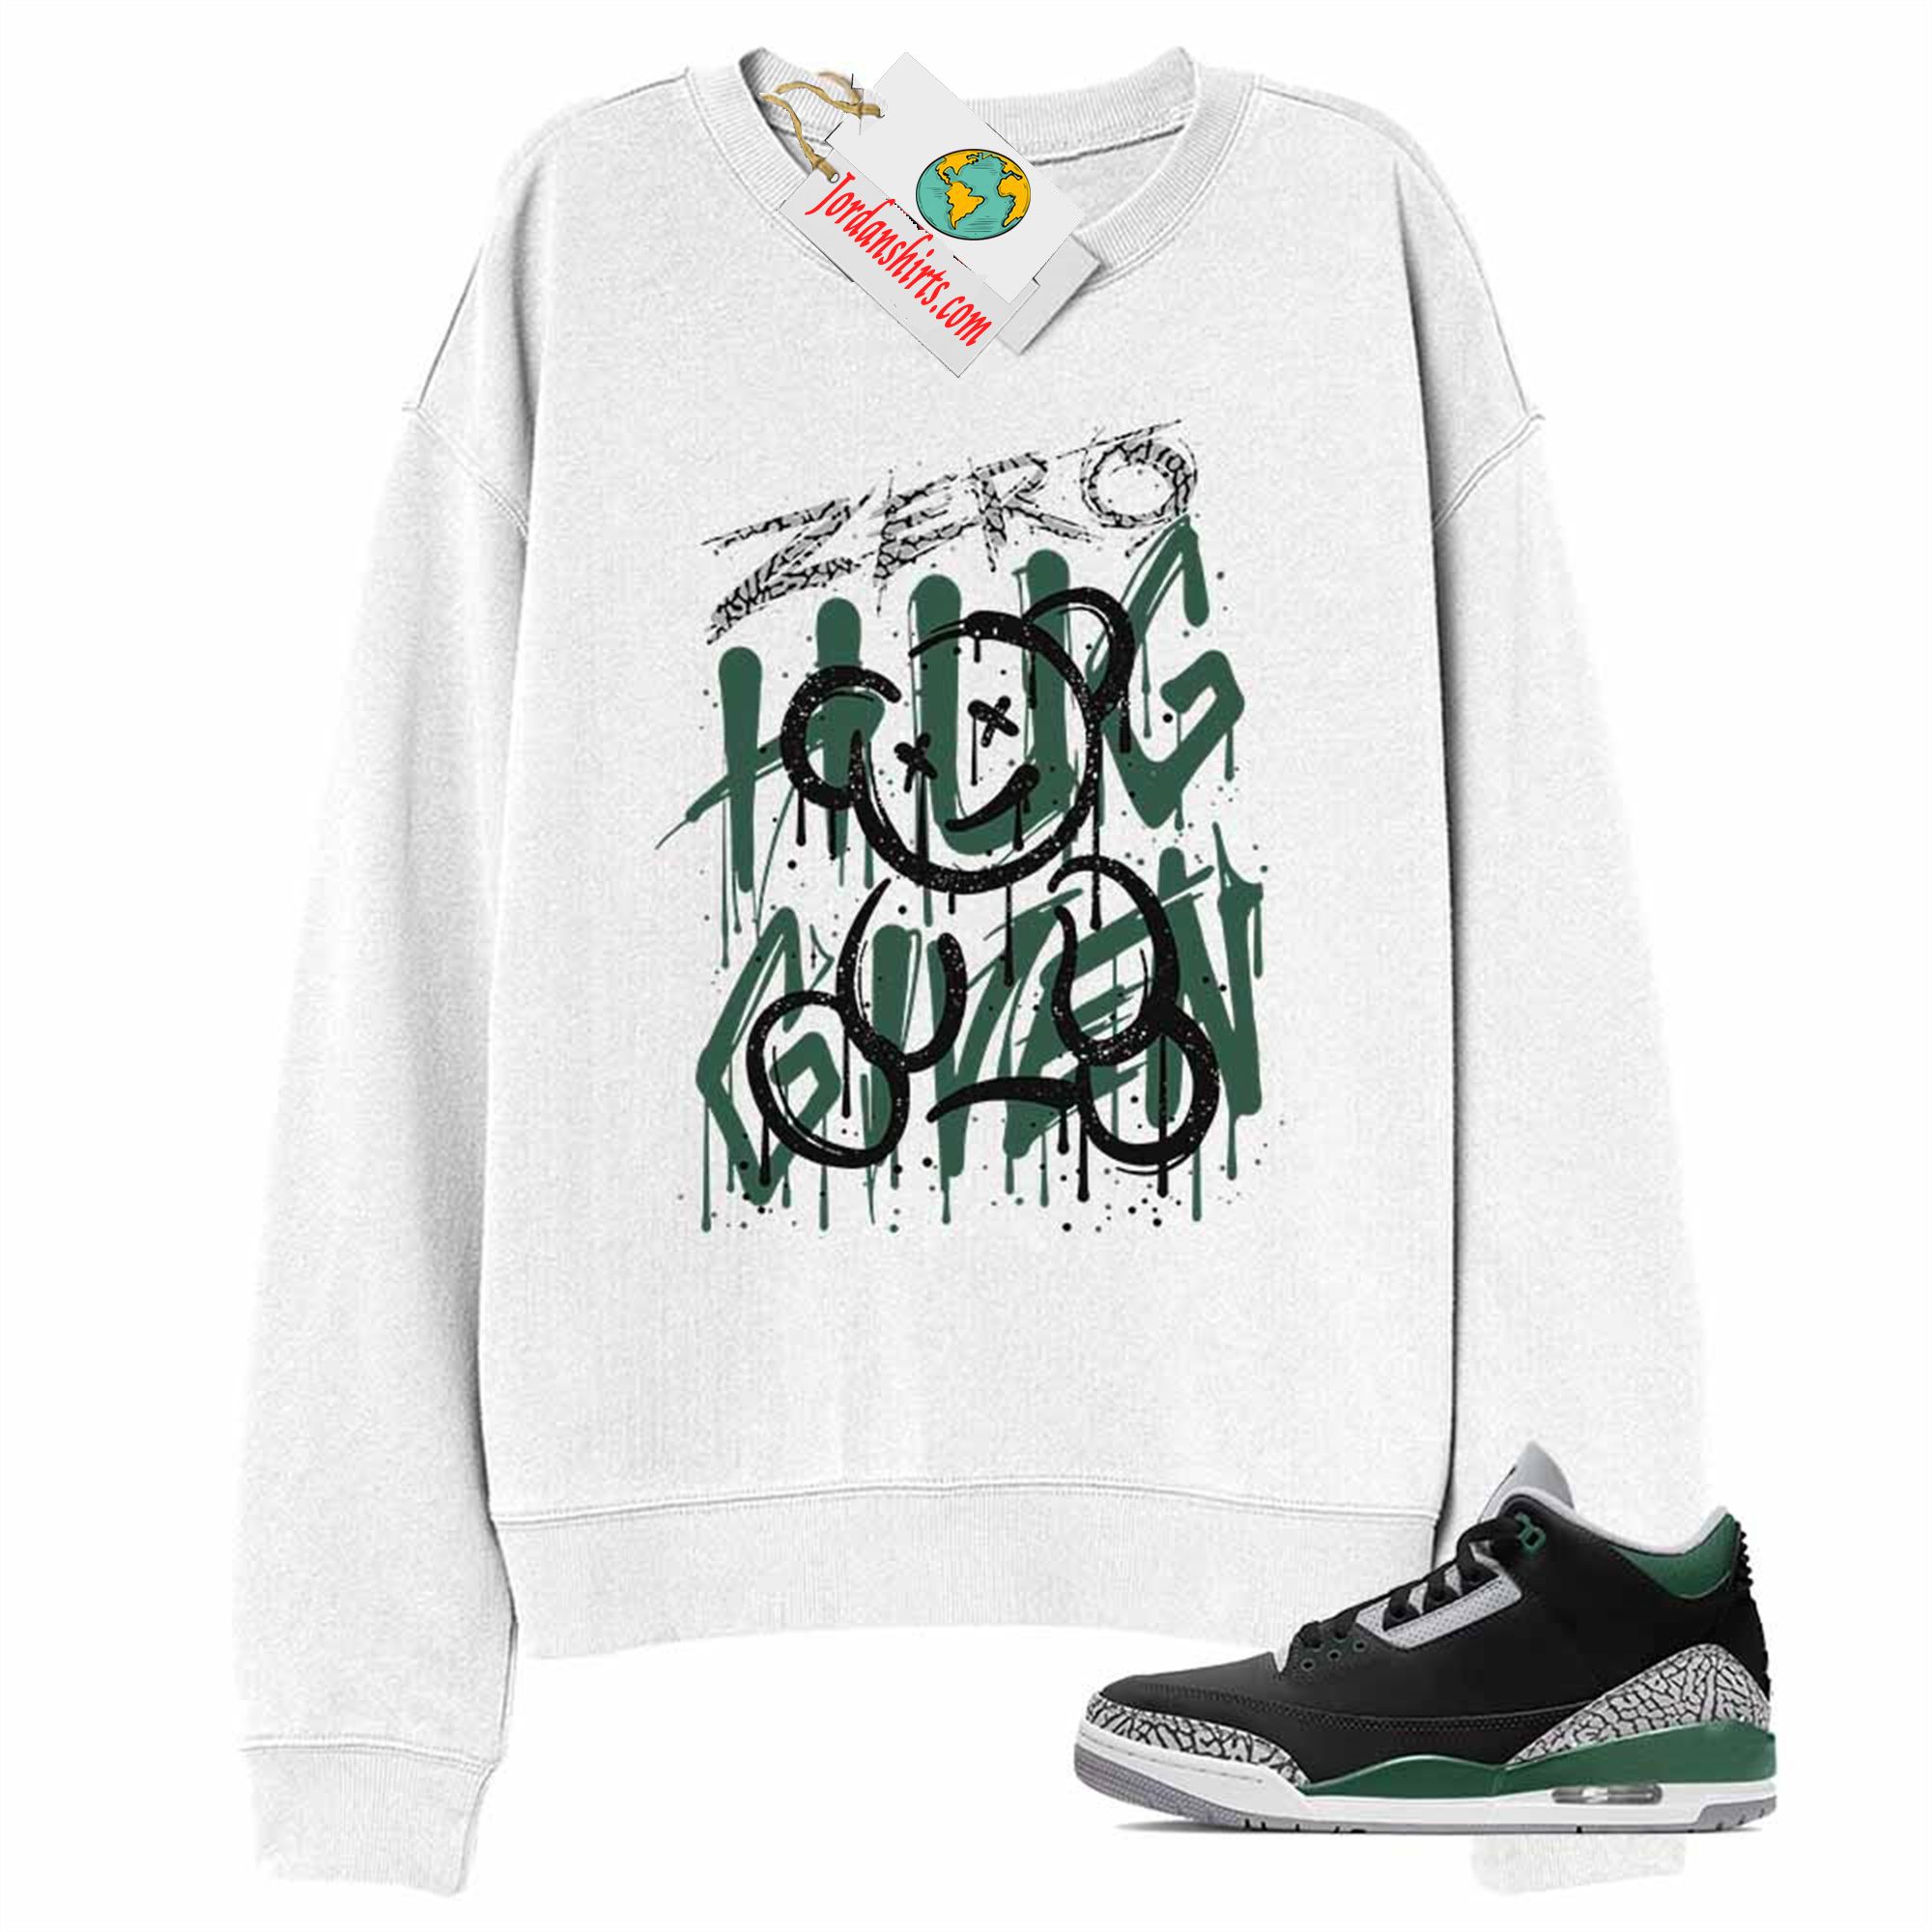 Jordan 3 Sweatshirt, Zero Hug Given White Sweatshirt Air Jordan 3 Pine Green 3s Size Up To 5xl